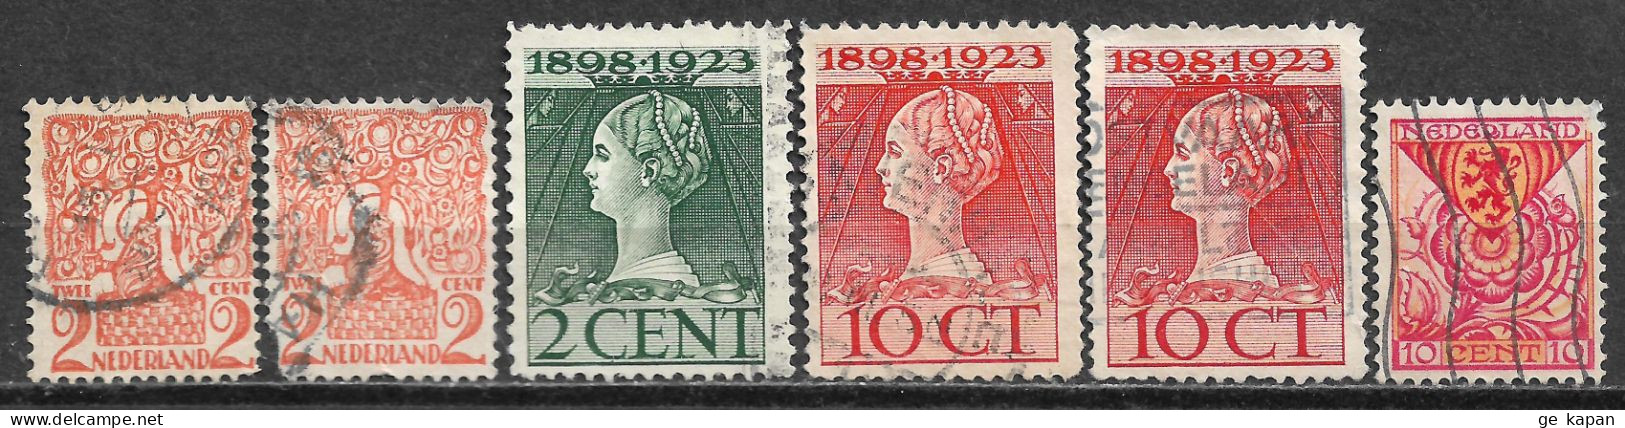 1923-1925 NETHERLANDS SET OF 6 USED STAMPS (Scott # 114,124,127,B11) CV $1.55 - Usati